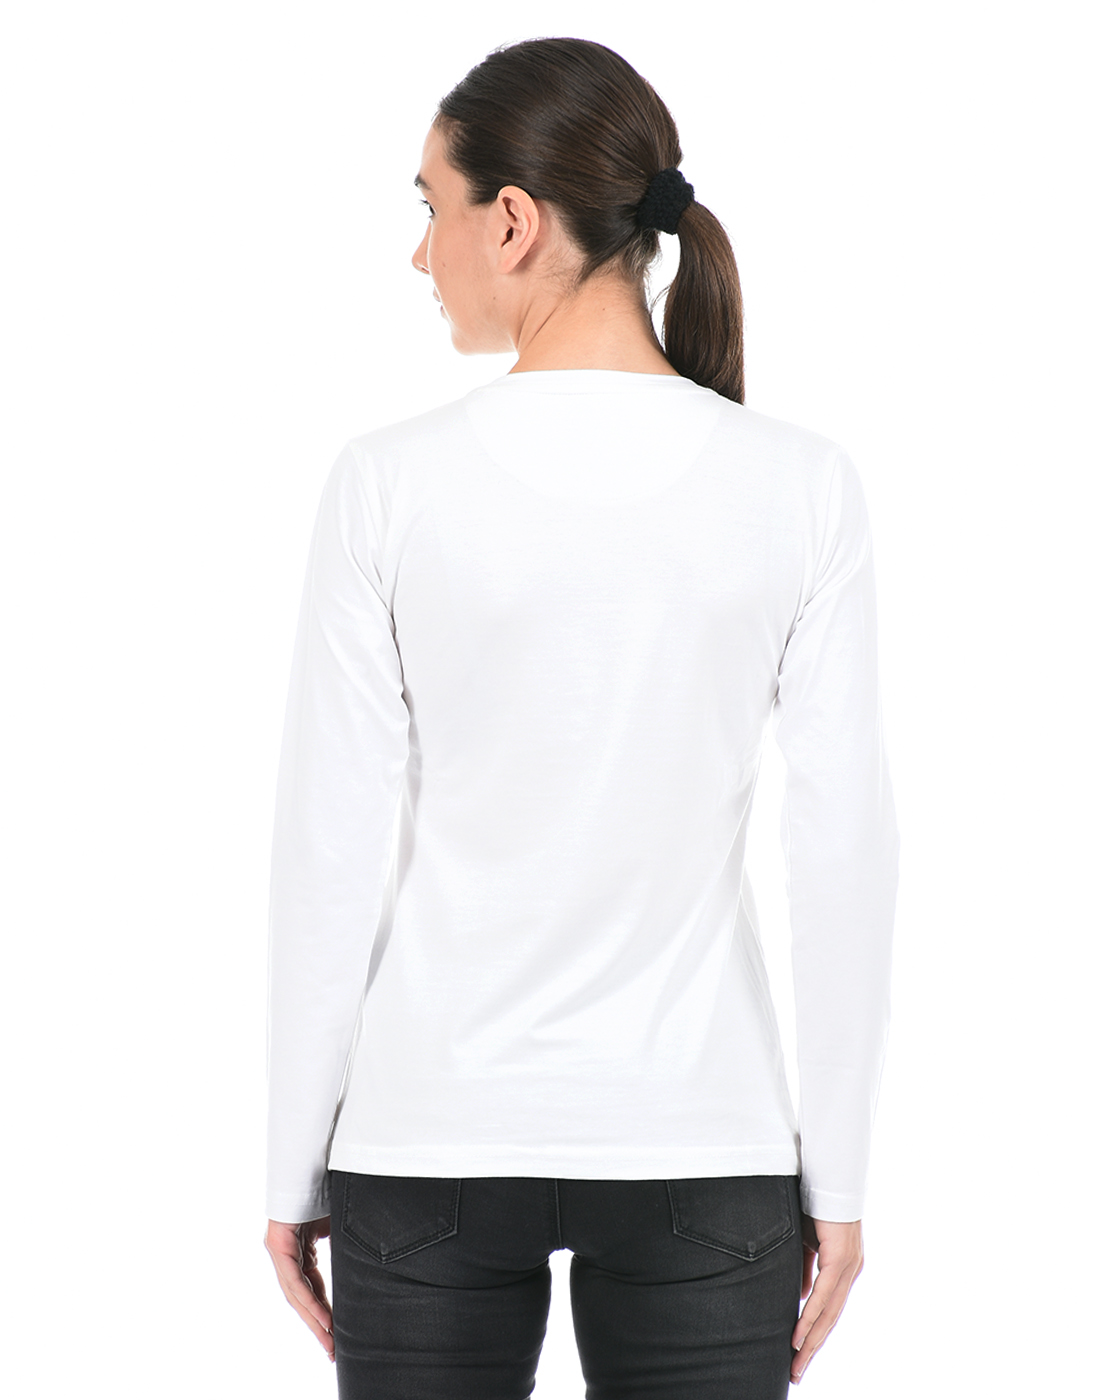 Cloak & Decker by Monte Carlo Women Solid White T-Shirt